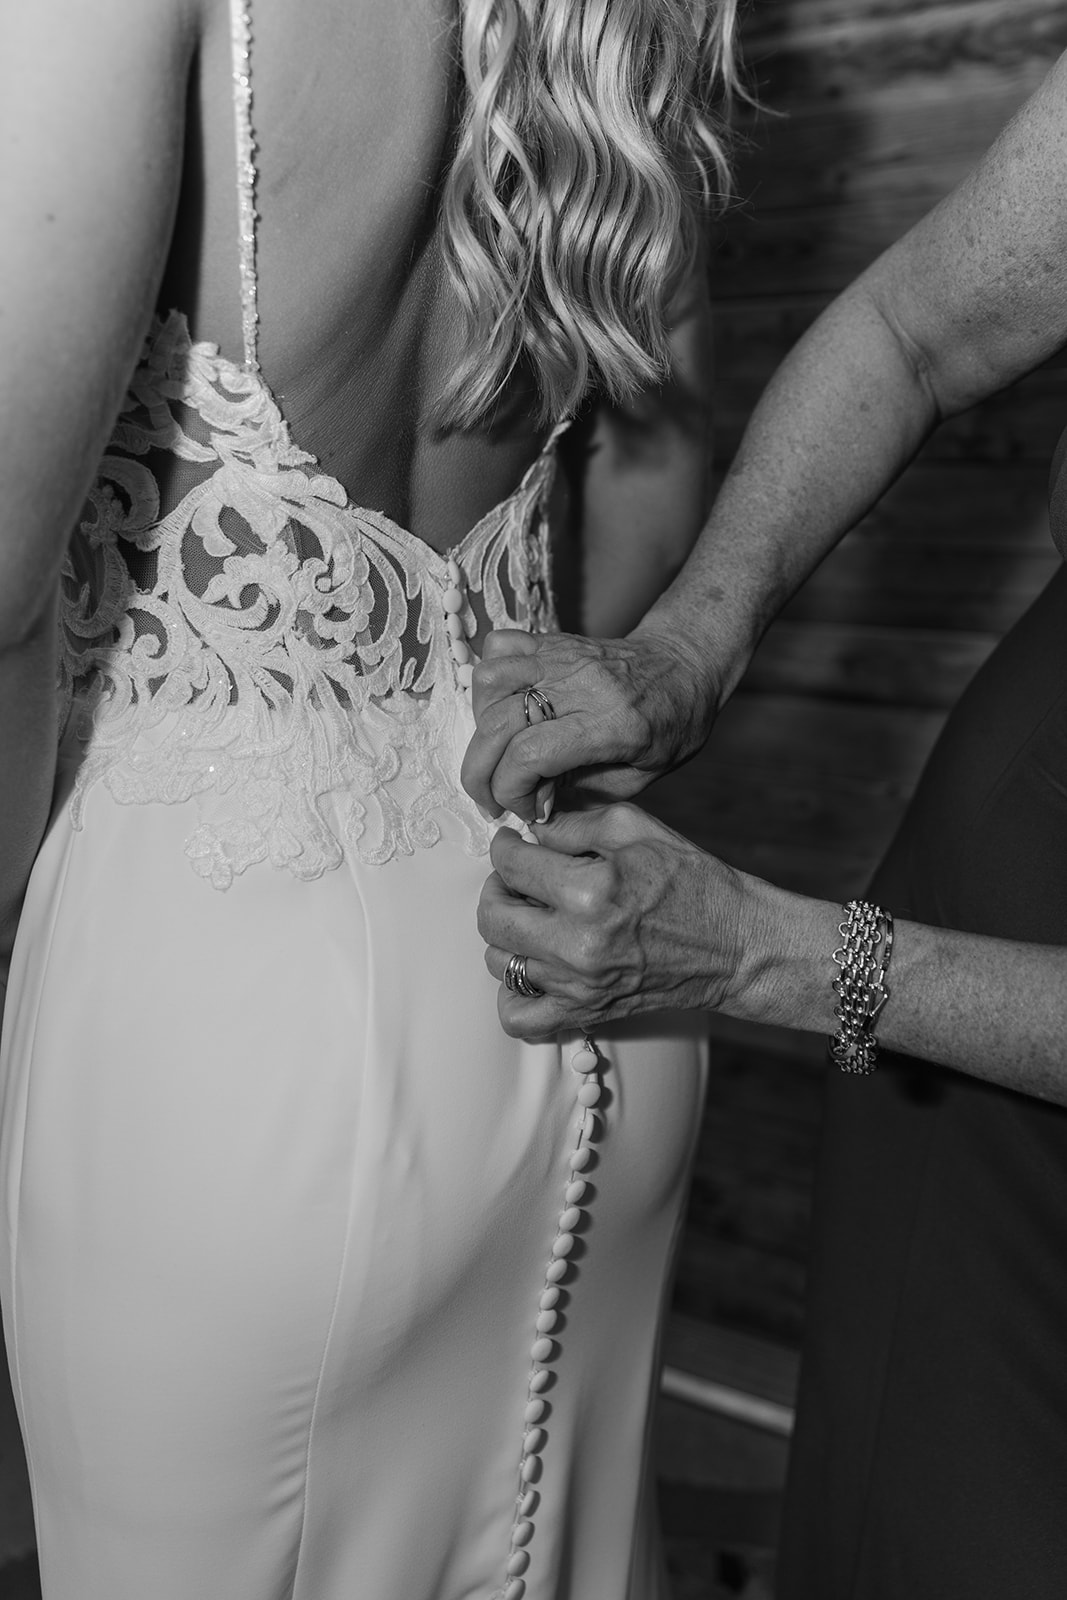 Mother buttons her daughter's wedding dress